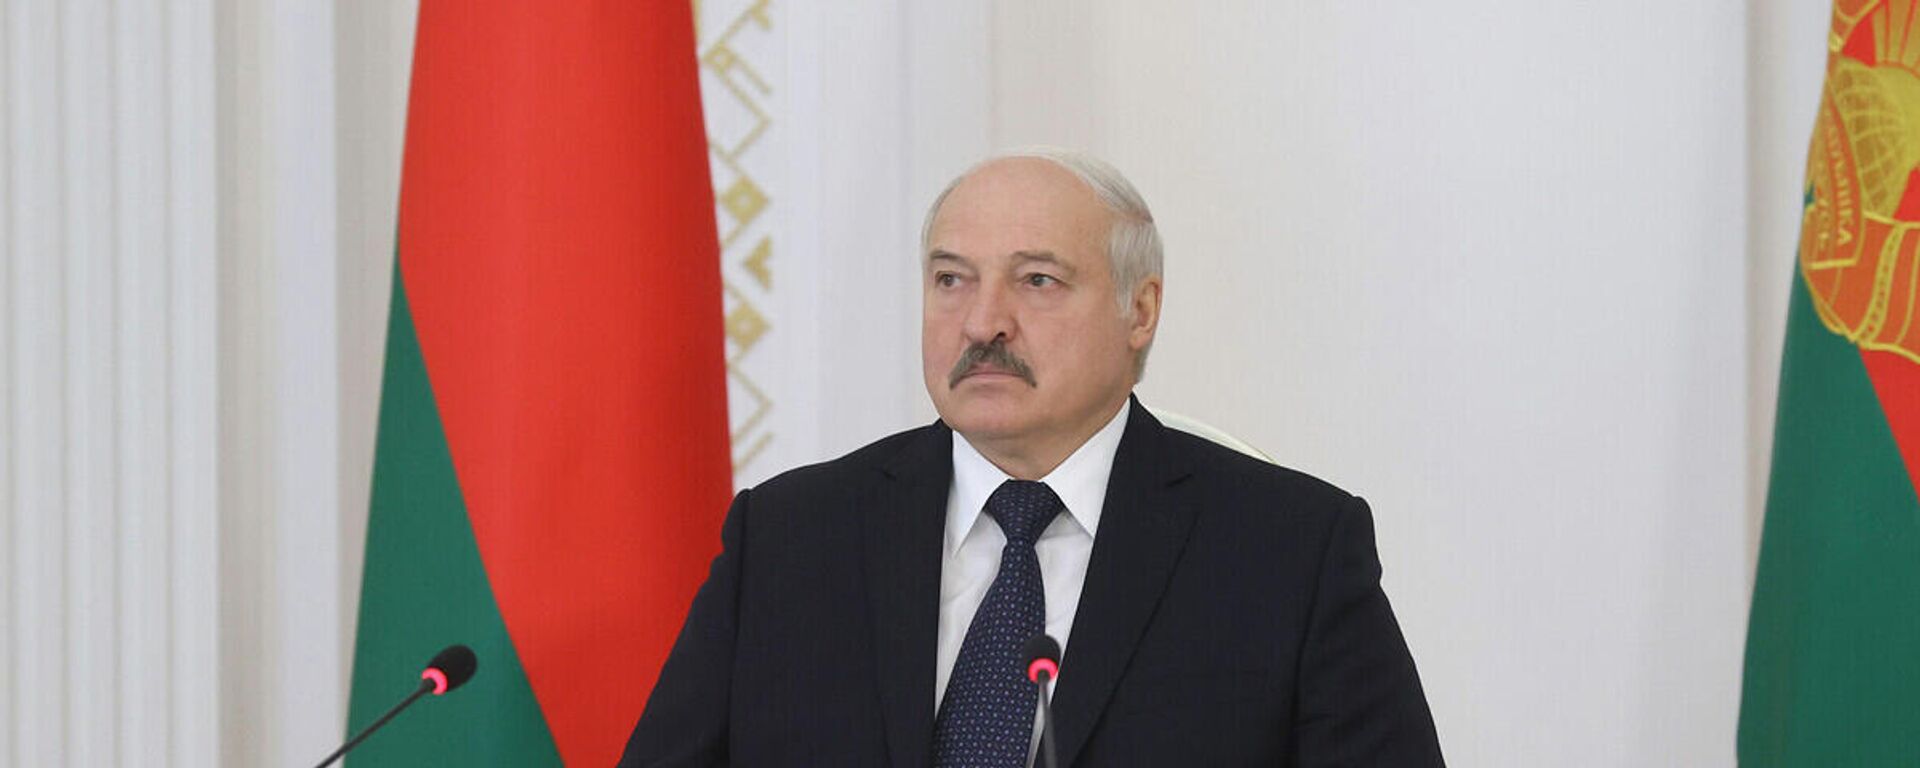 Baltarusijos prezidentas Aleksandras Lukašenka - Sputnik Lietuva, 1920, 02.09.2021